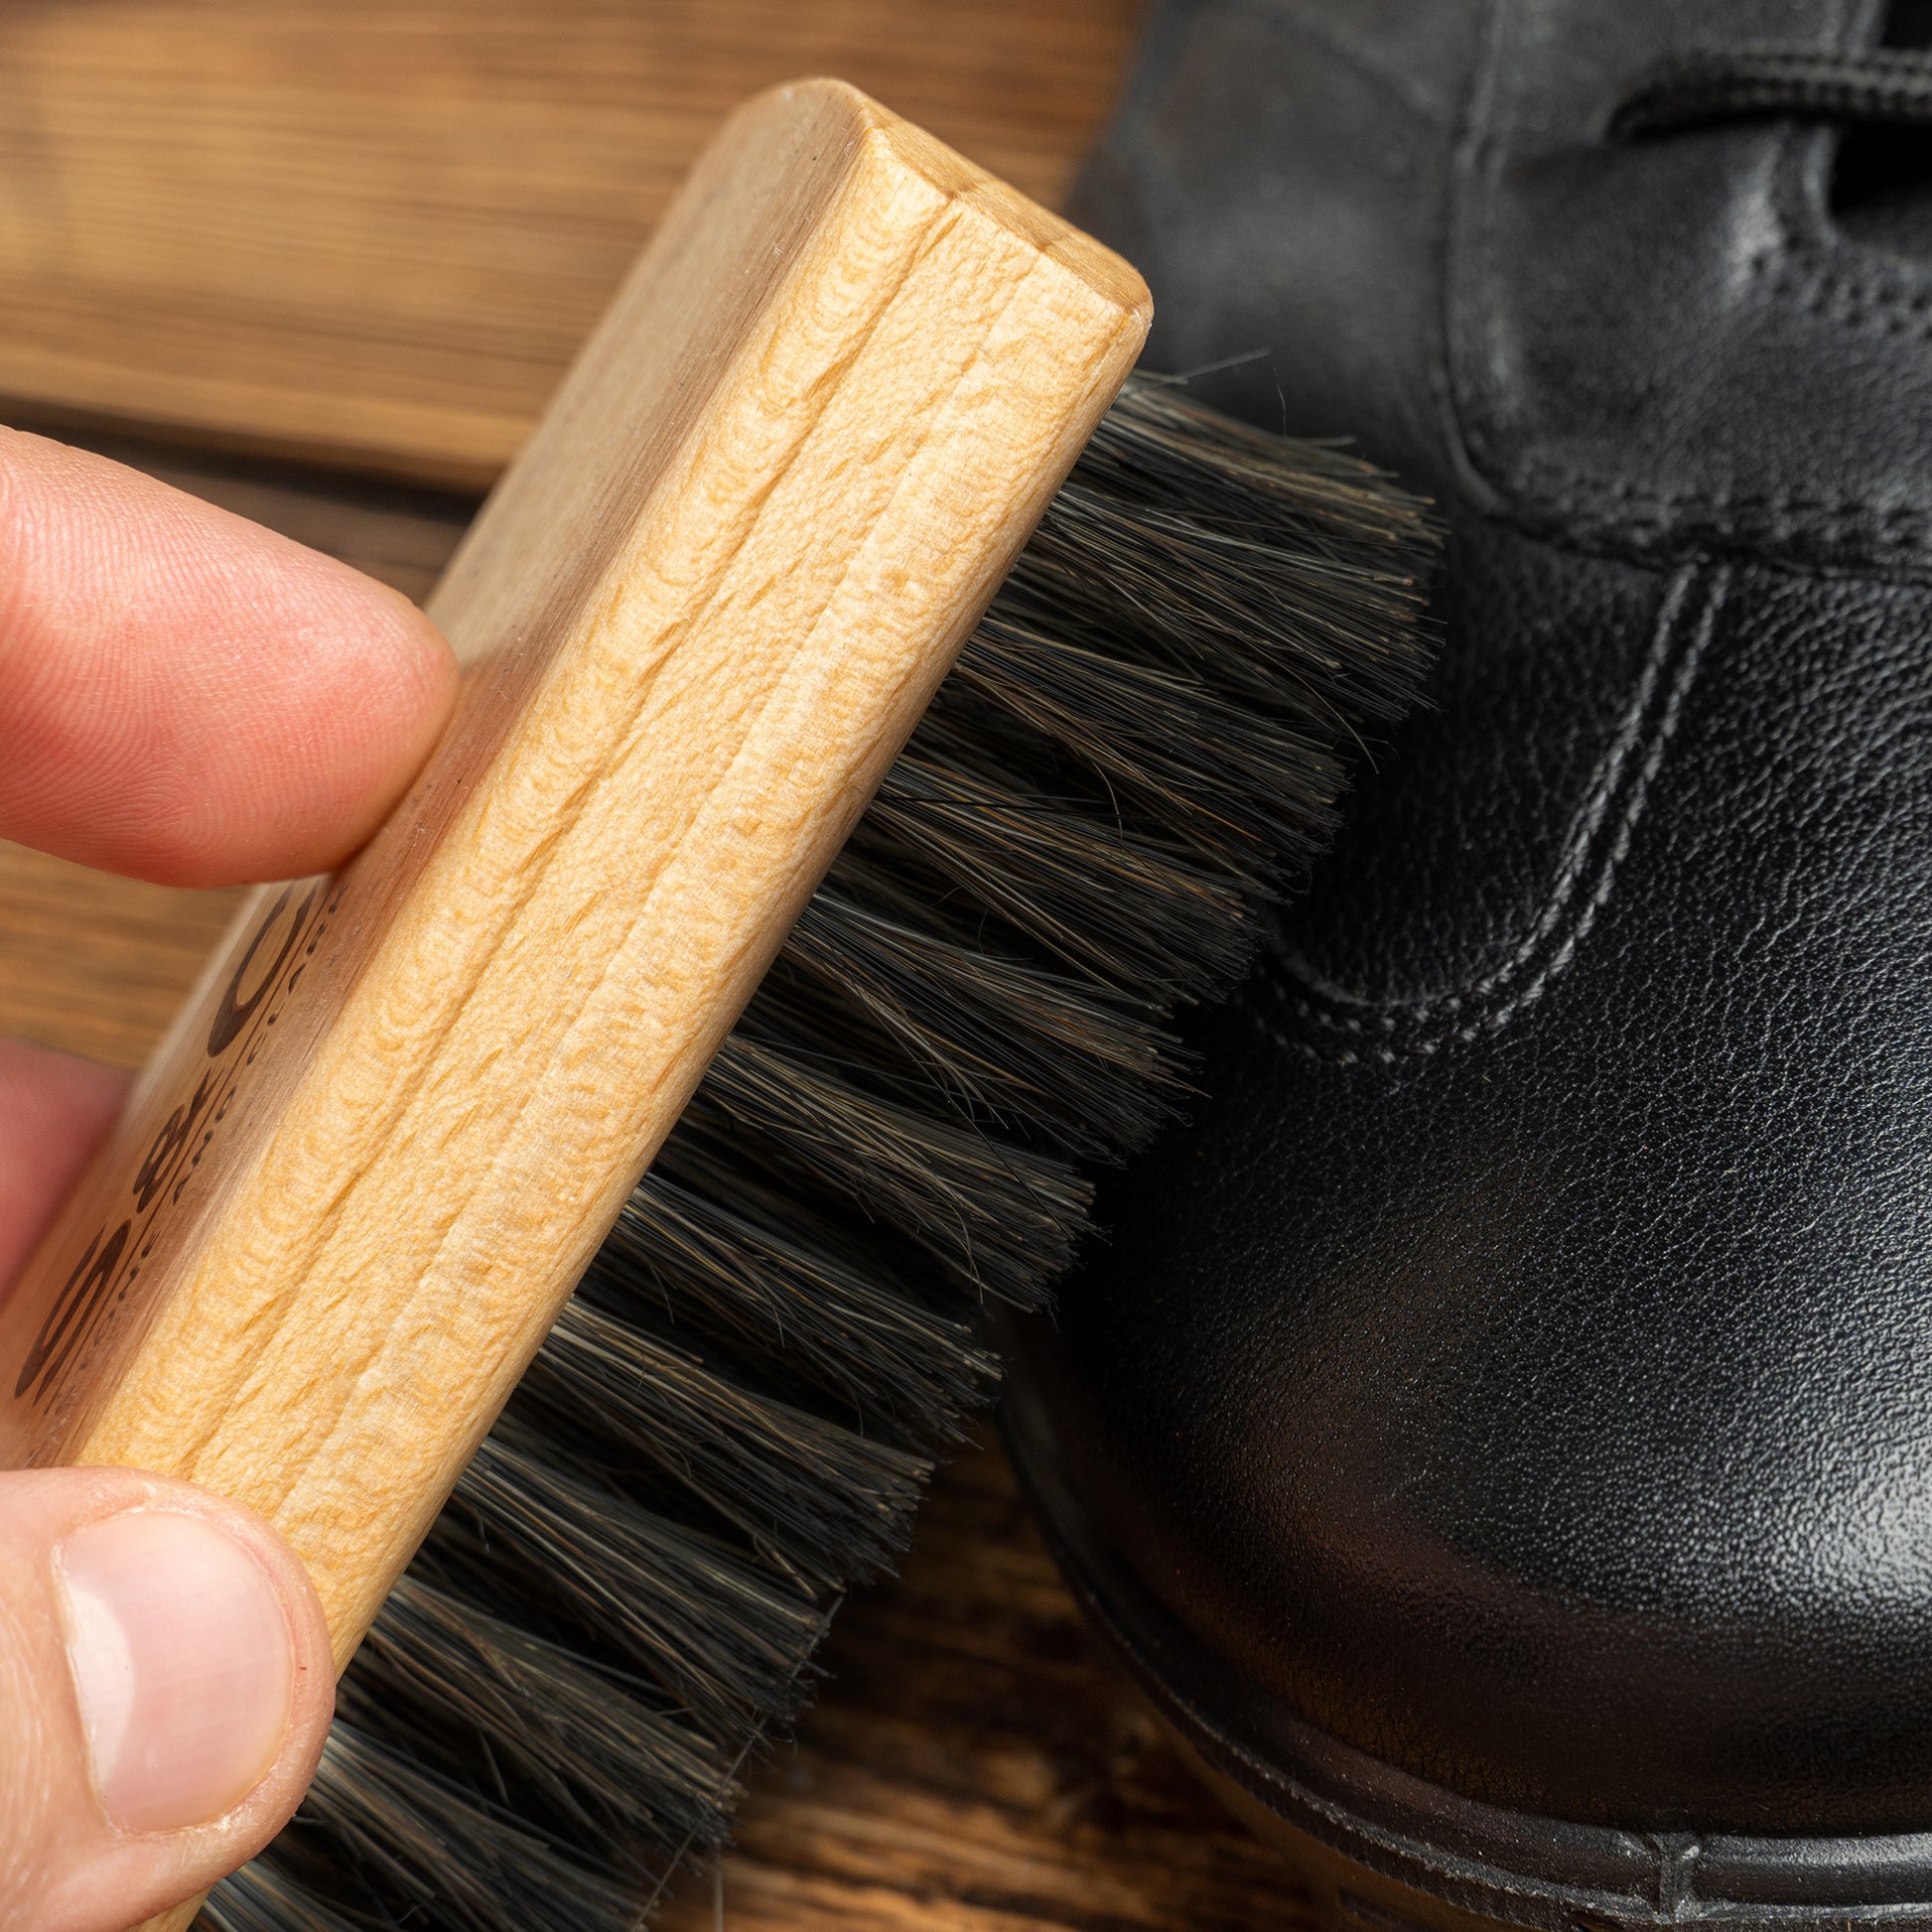  Mini 4 Shoe Brush - Portable Horse Hair Brush w/Natural Wood  Handle - Soft Bristle Shoe Polish Brush for Cleaning, Buffing & Polishing  Leather Shoes - Travel-Friendly Size Boot Brush 